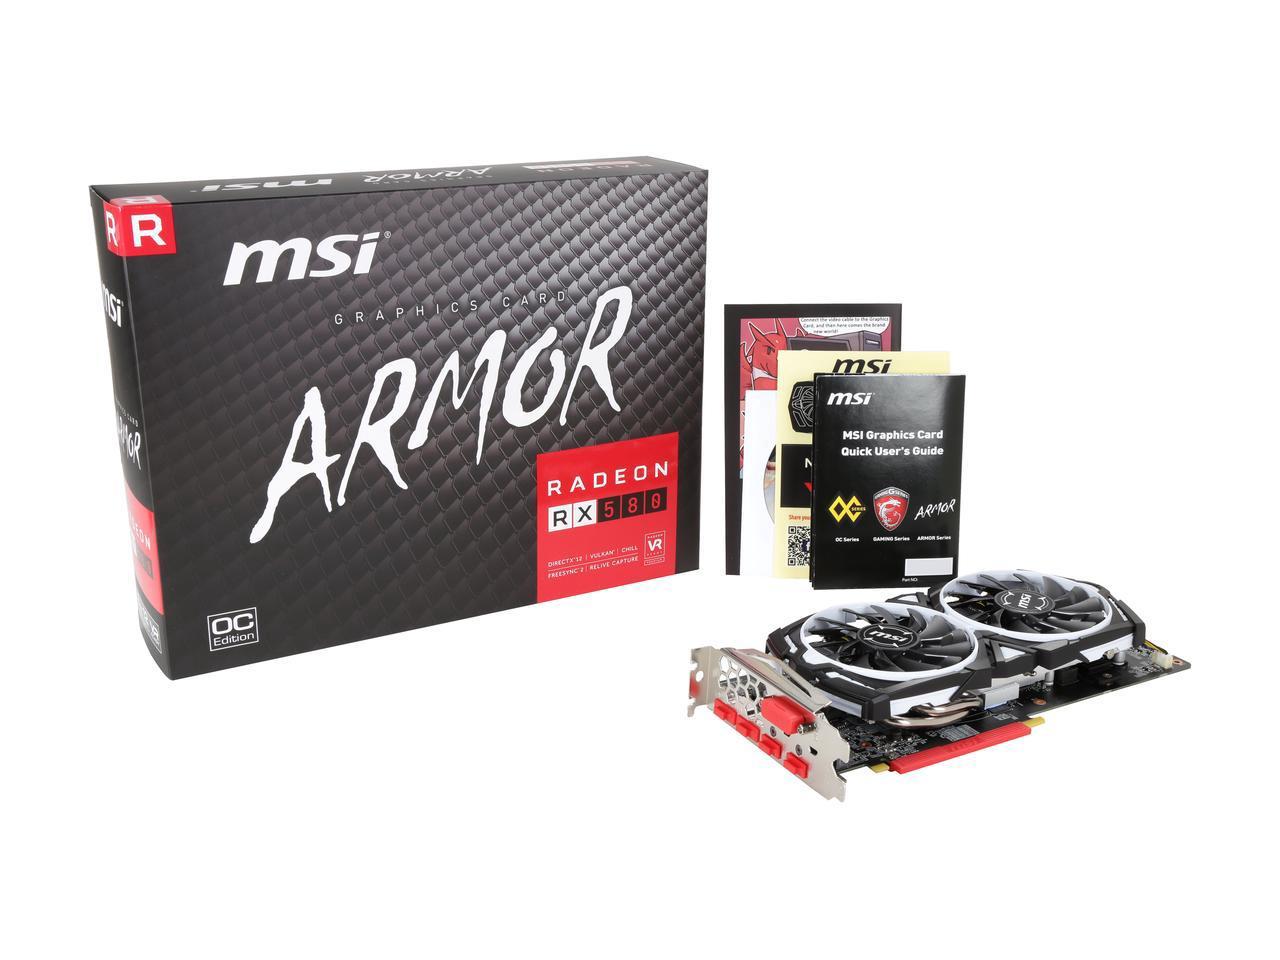 MSI Radeon RX 580 ARMOR 8G OC 256-Bit GDDR5 Video Card for $159.99